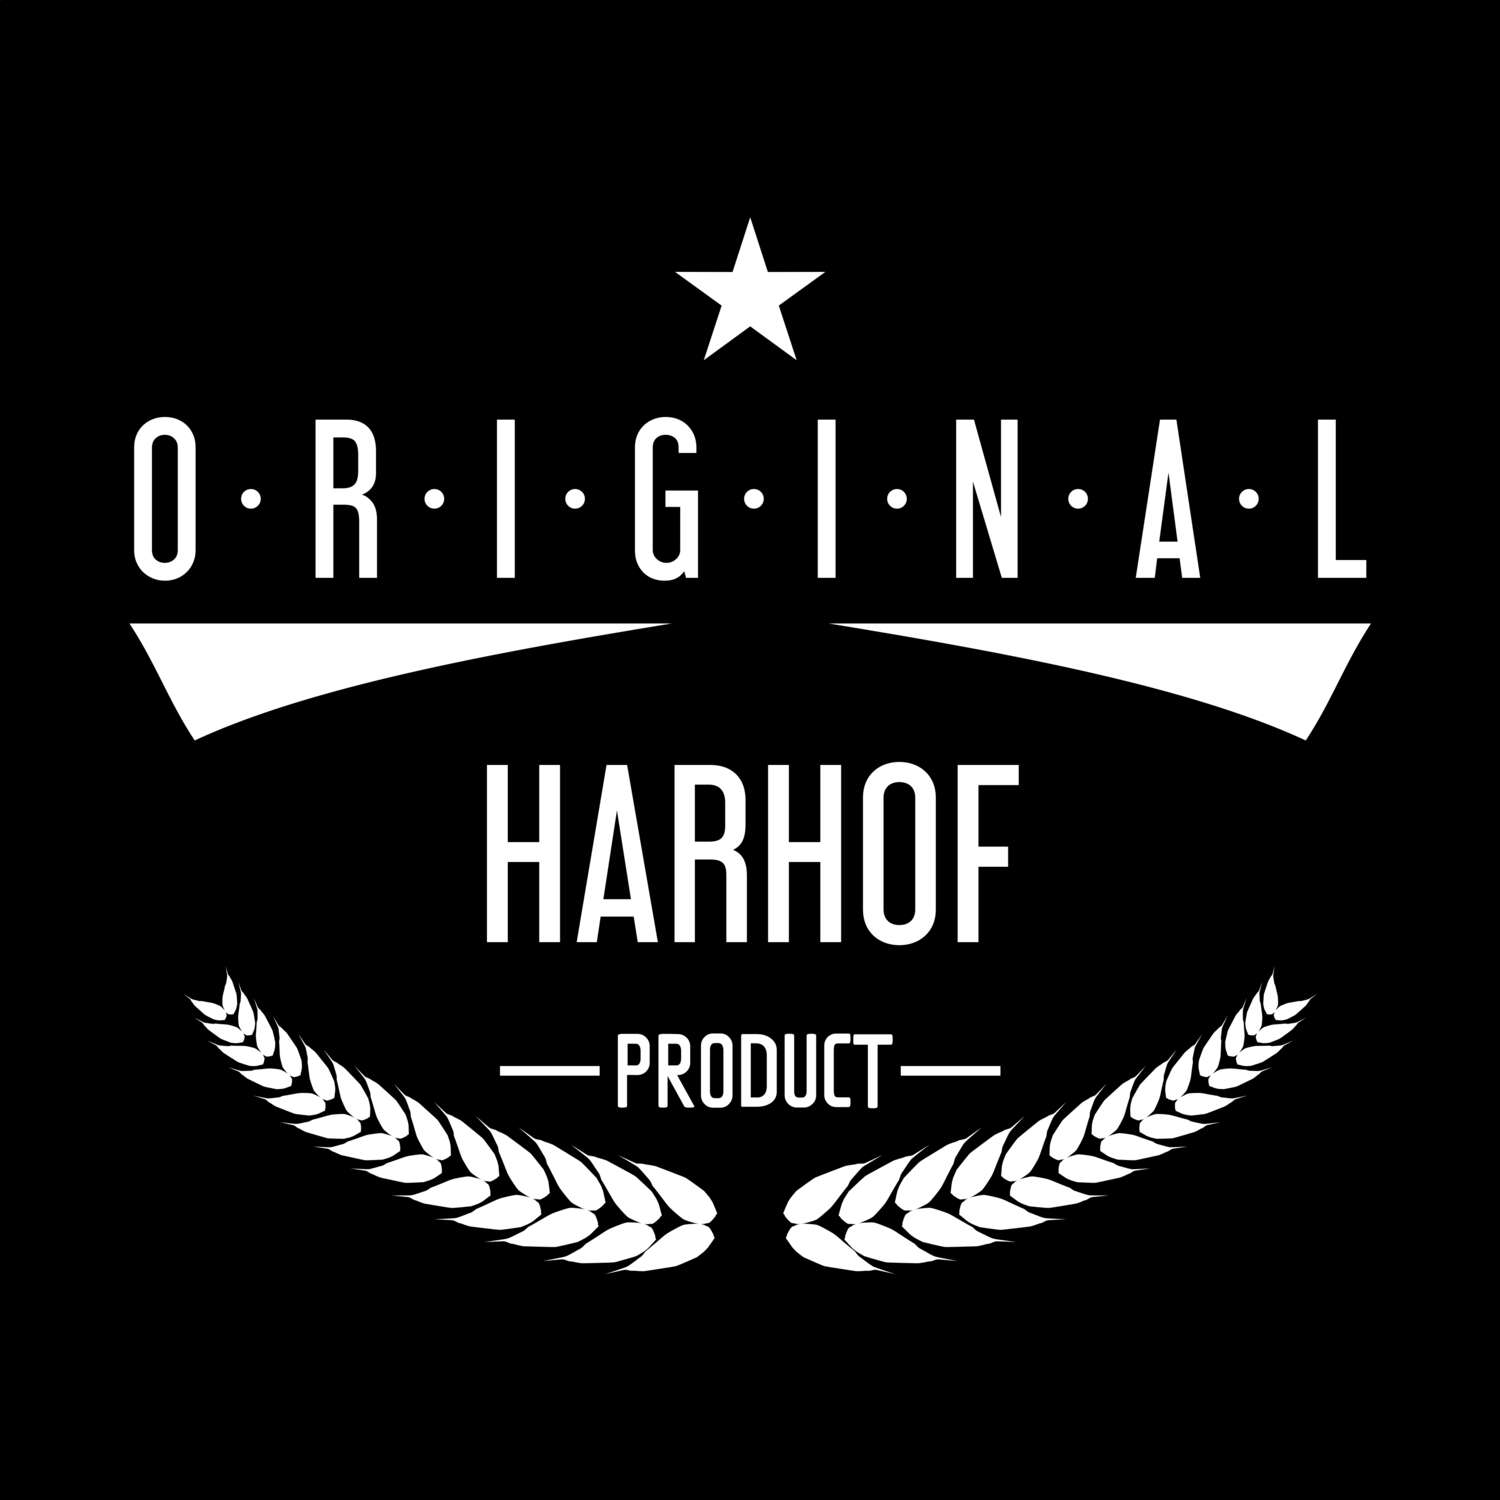 Harhof T-Shirt »Original Product«